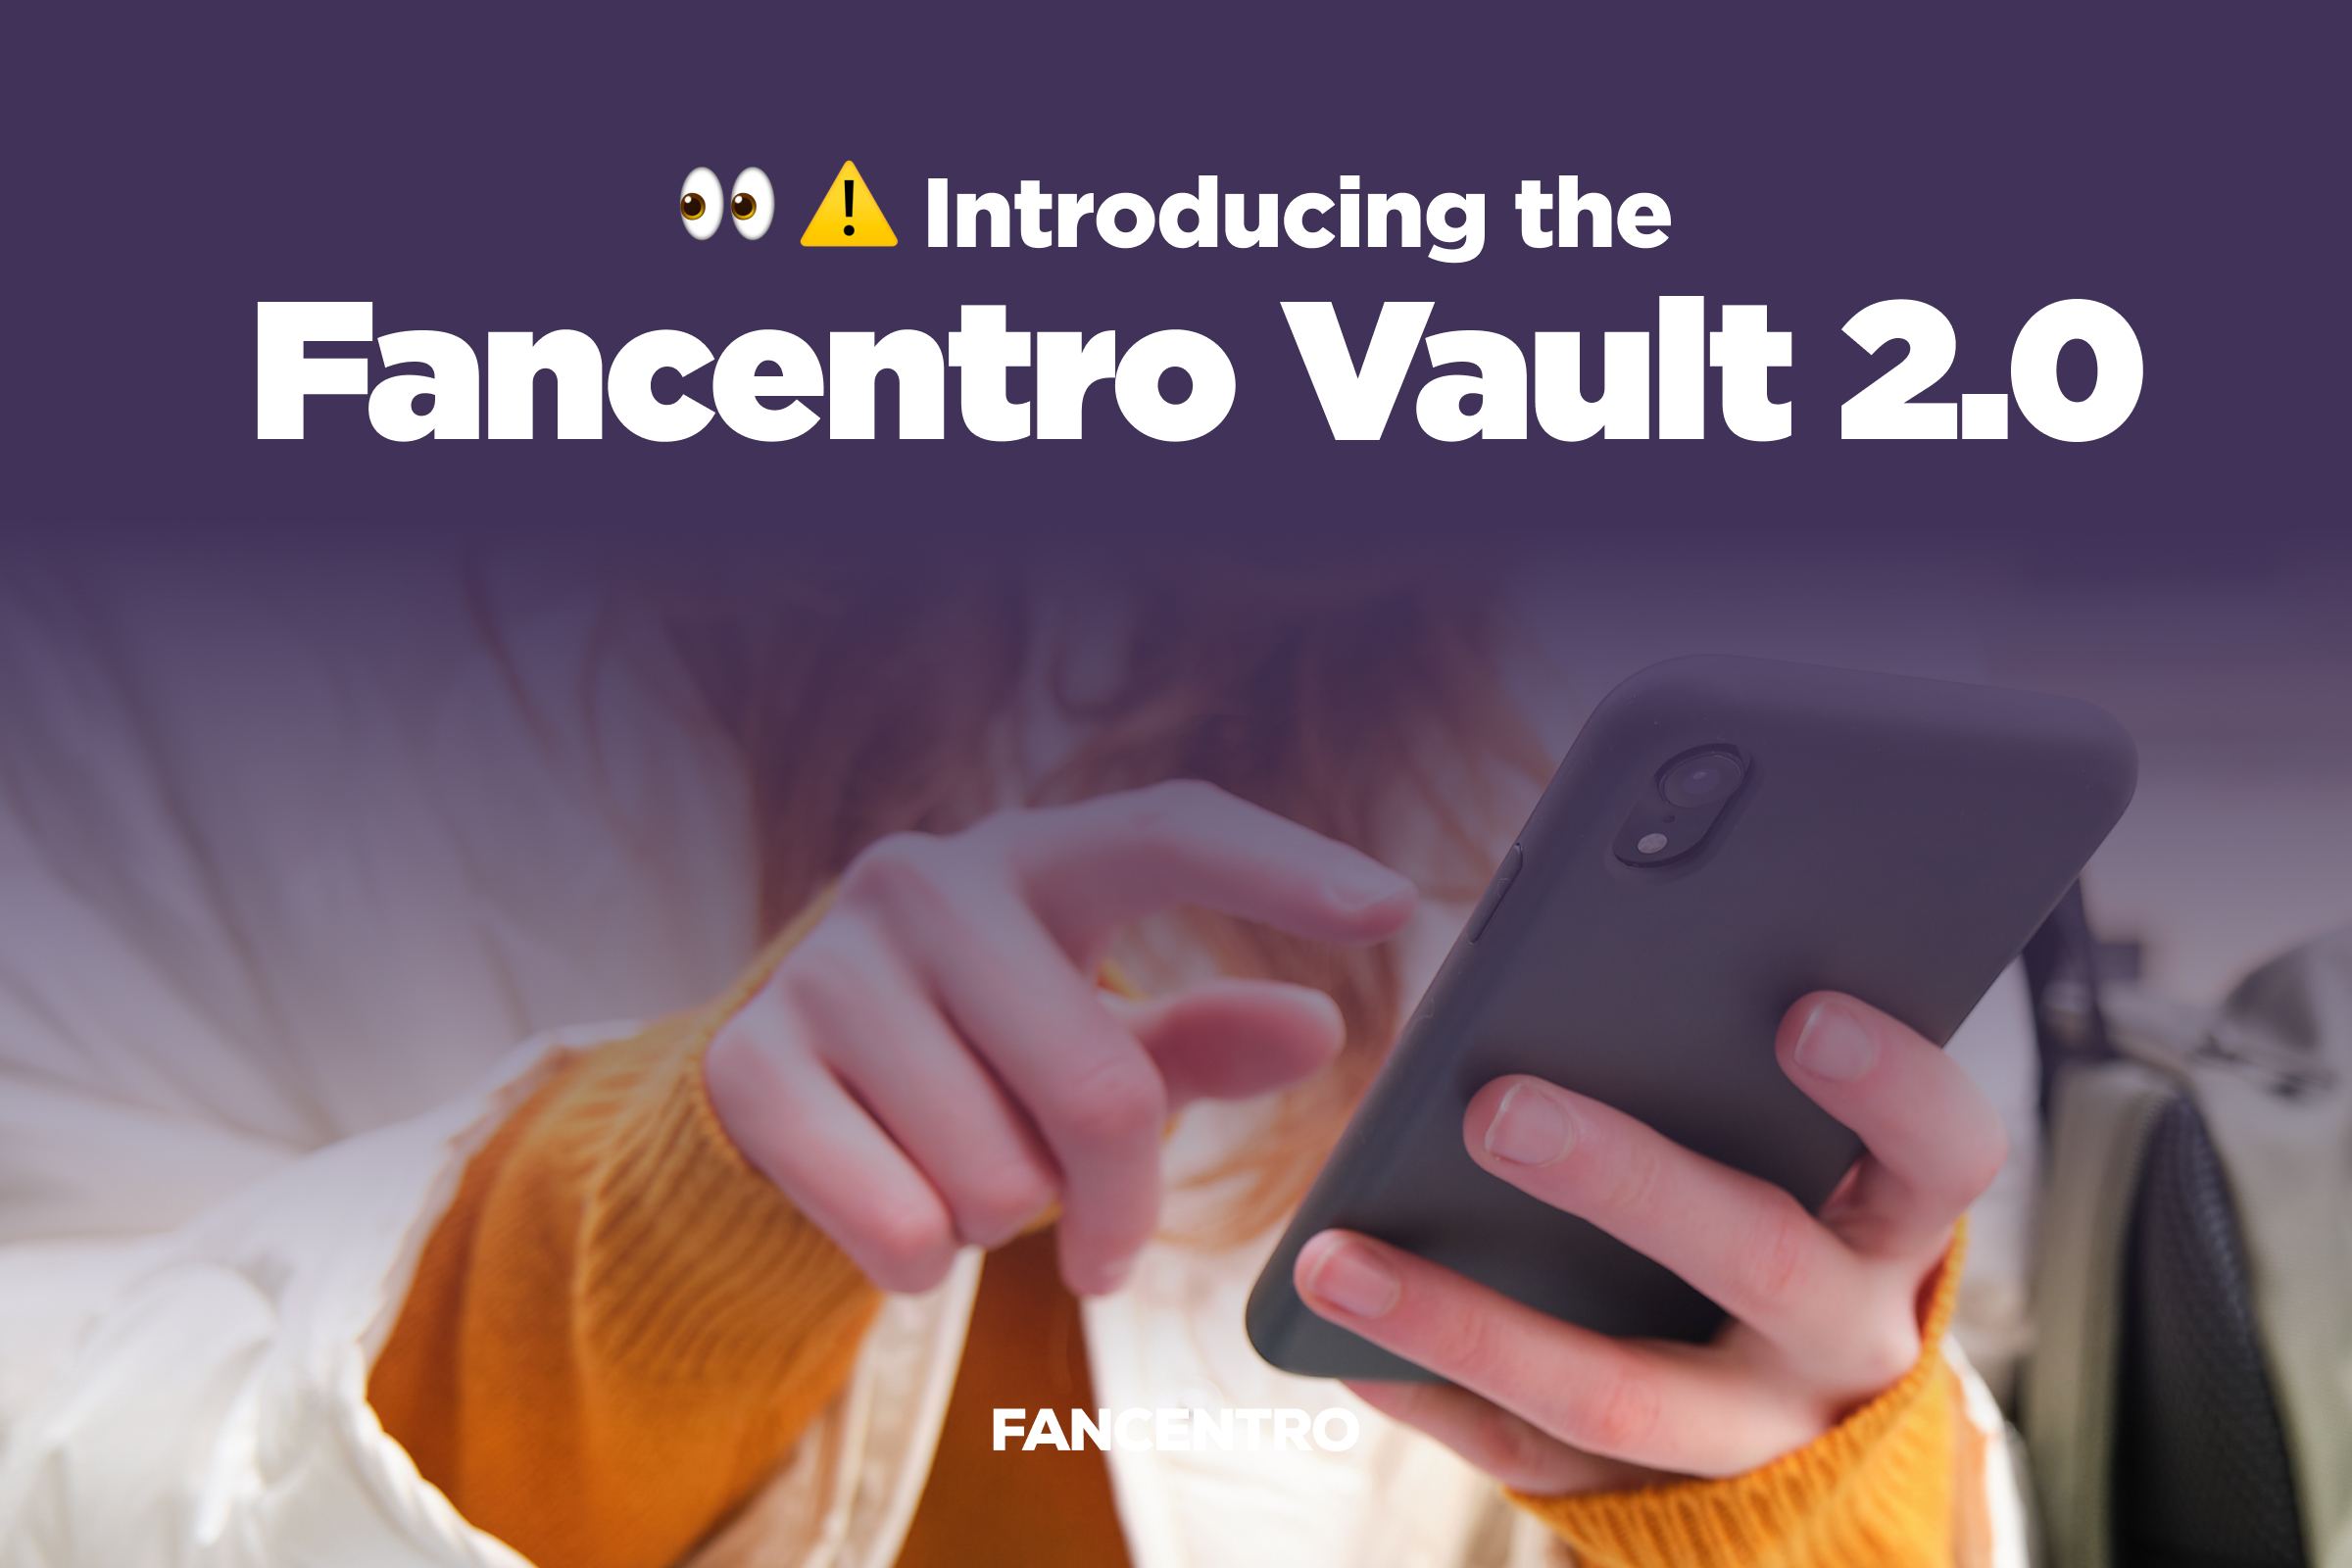 Introducing the Fancentro Vault 2.0